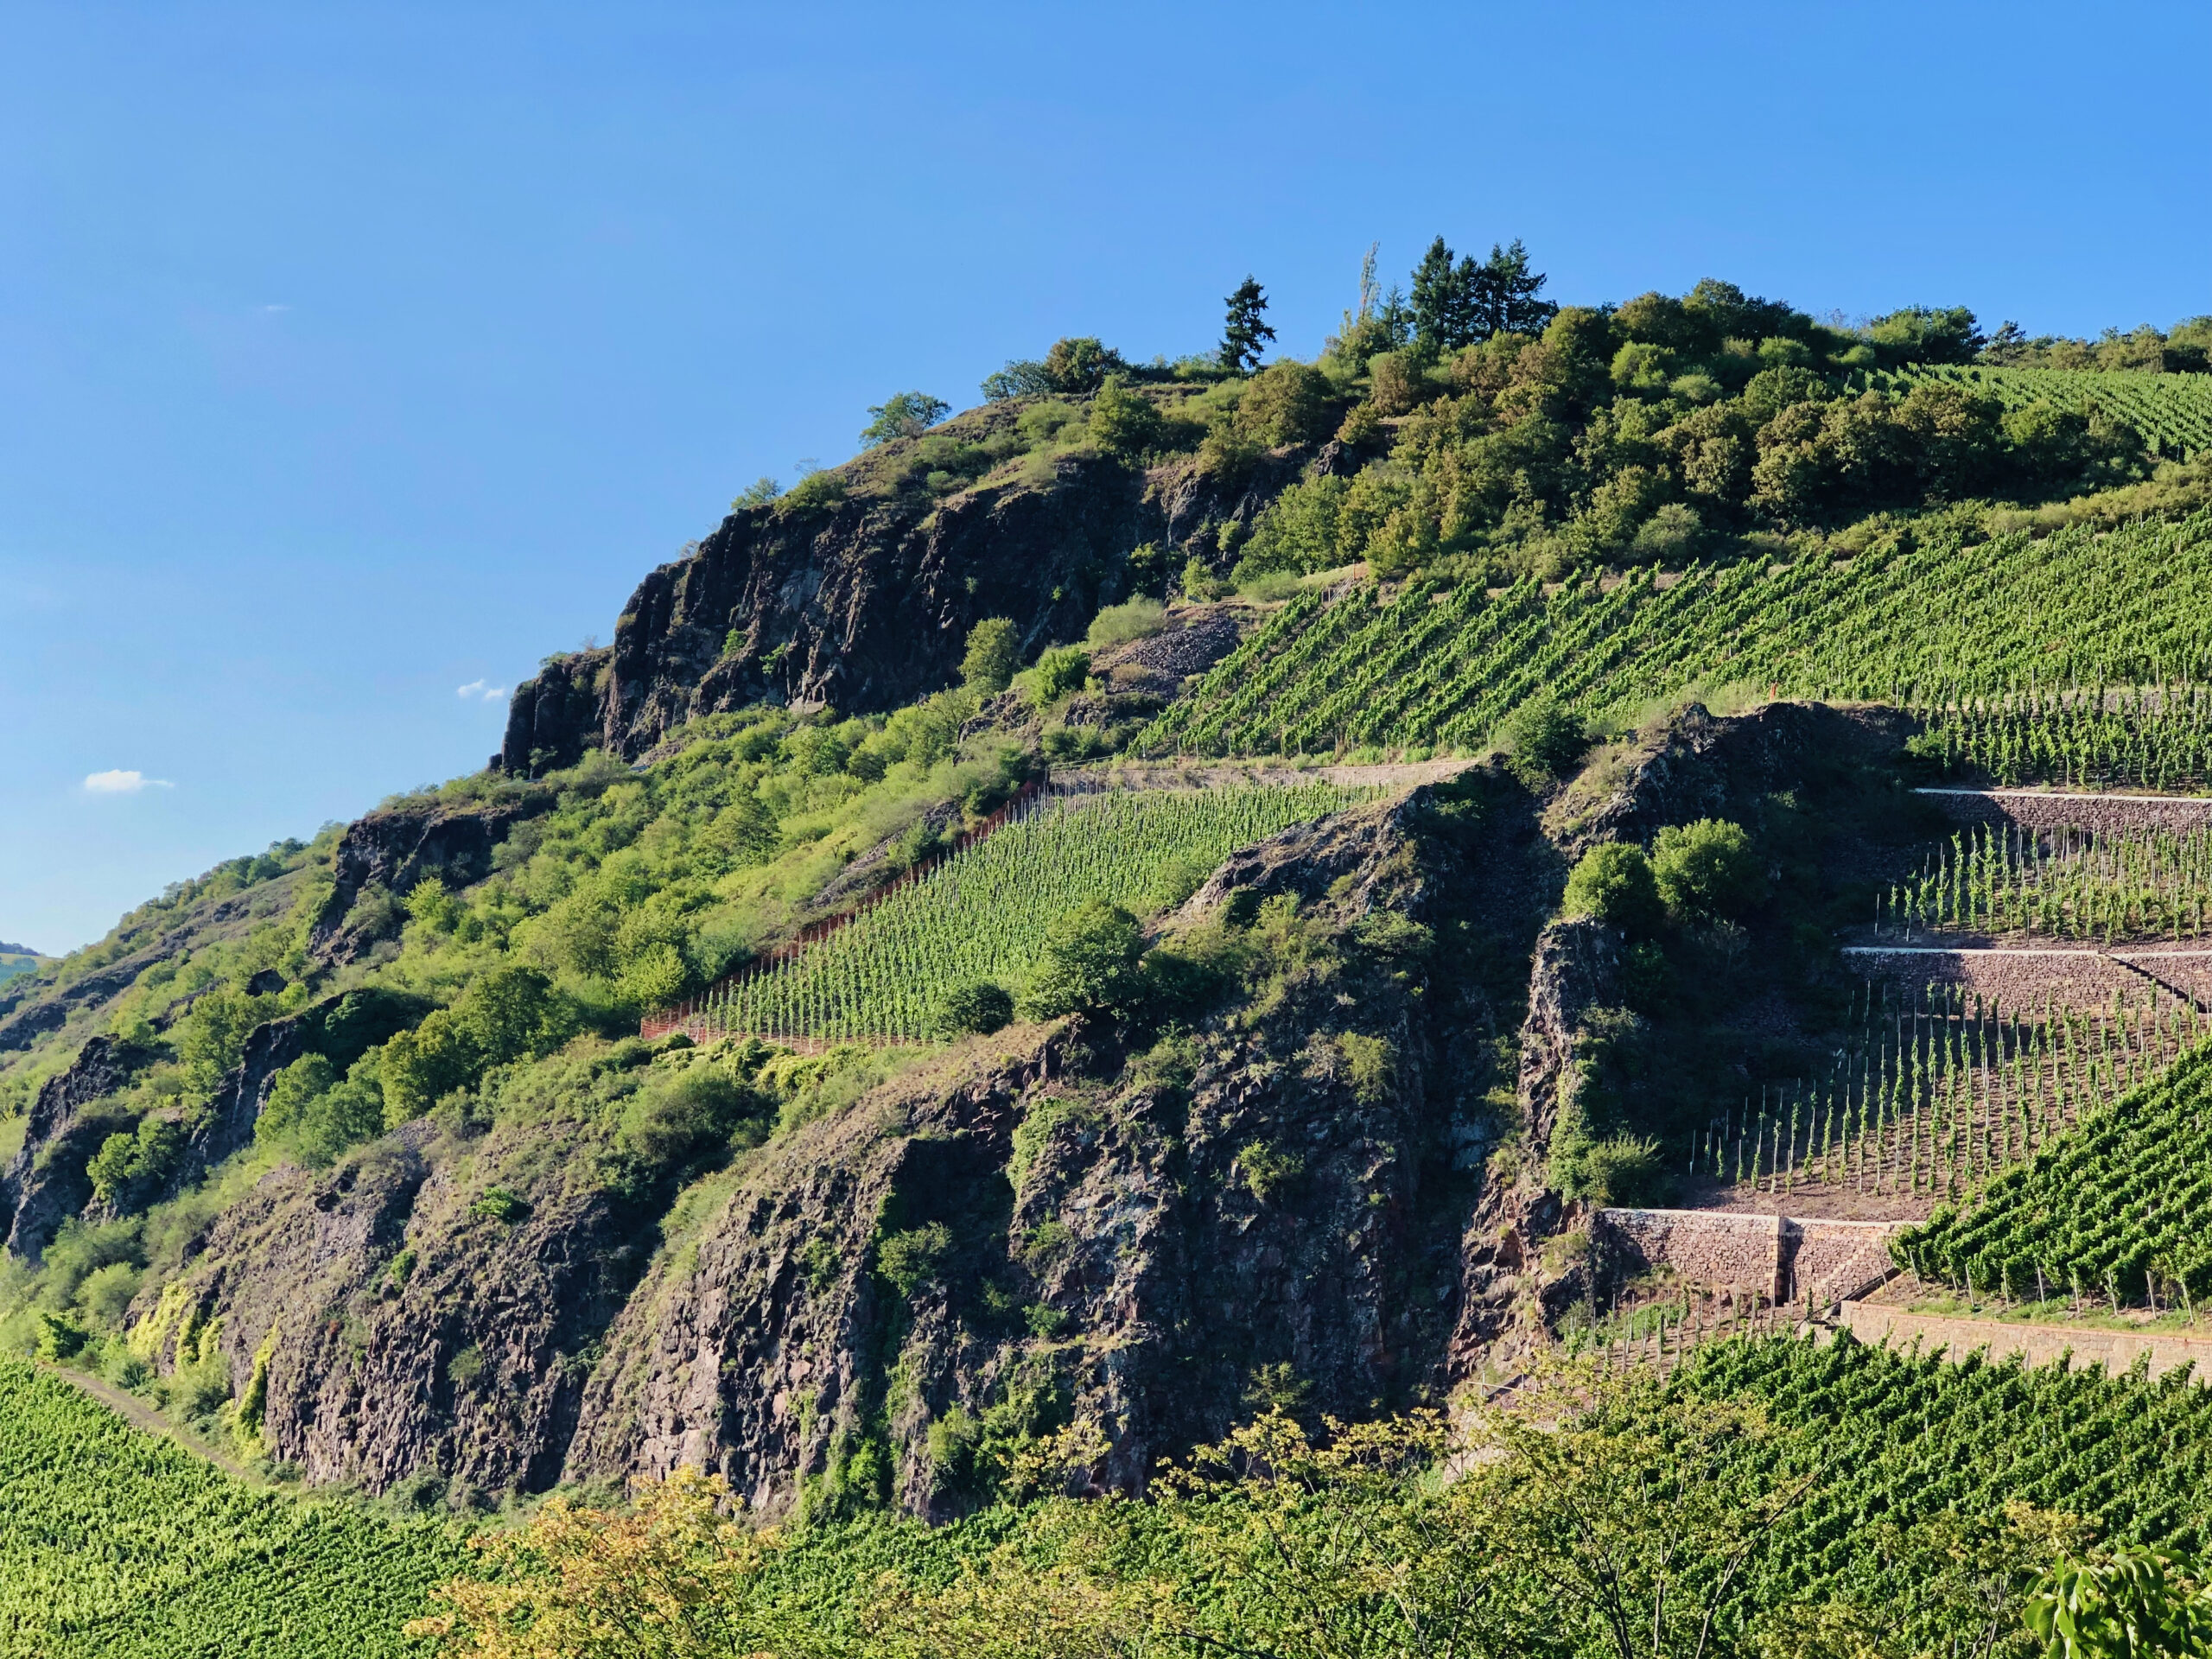 Schlossböckelheimer Kupfergrube vineyard with volcanic melaphry soil in Germany's Nahe winegrowing region.